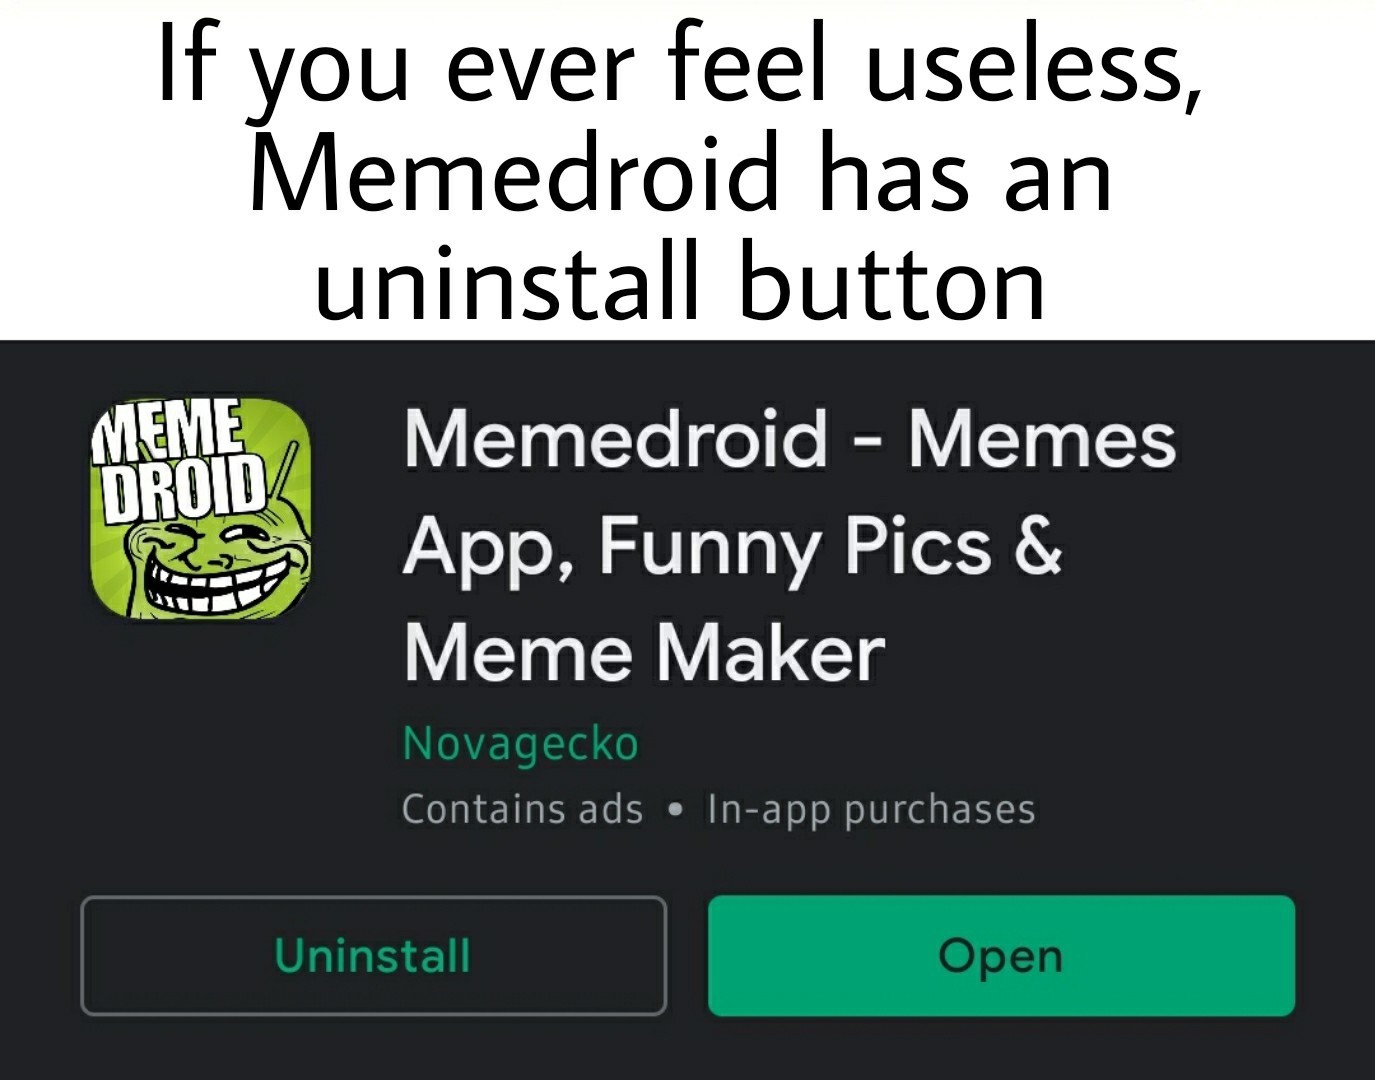 If you ever feel useless... - meme